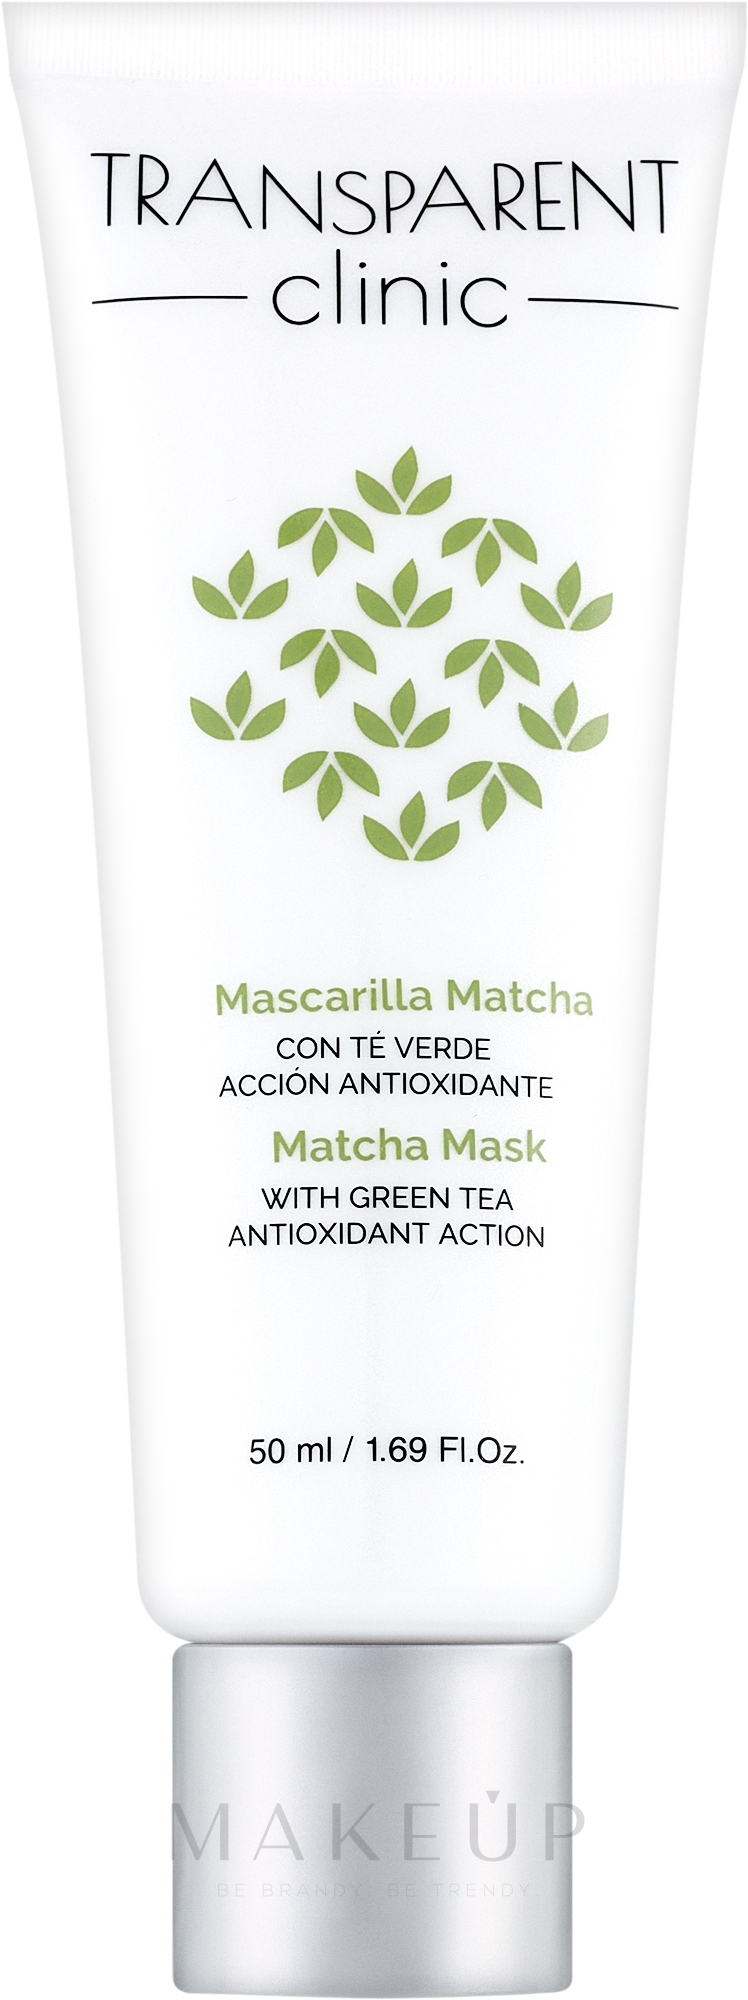 Anti-Aging Gesichtsmaske mit grünem Tee - Transparent Clinic Mascarilla Matcha — Bild 50 ml